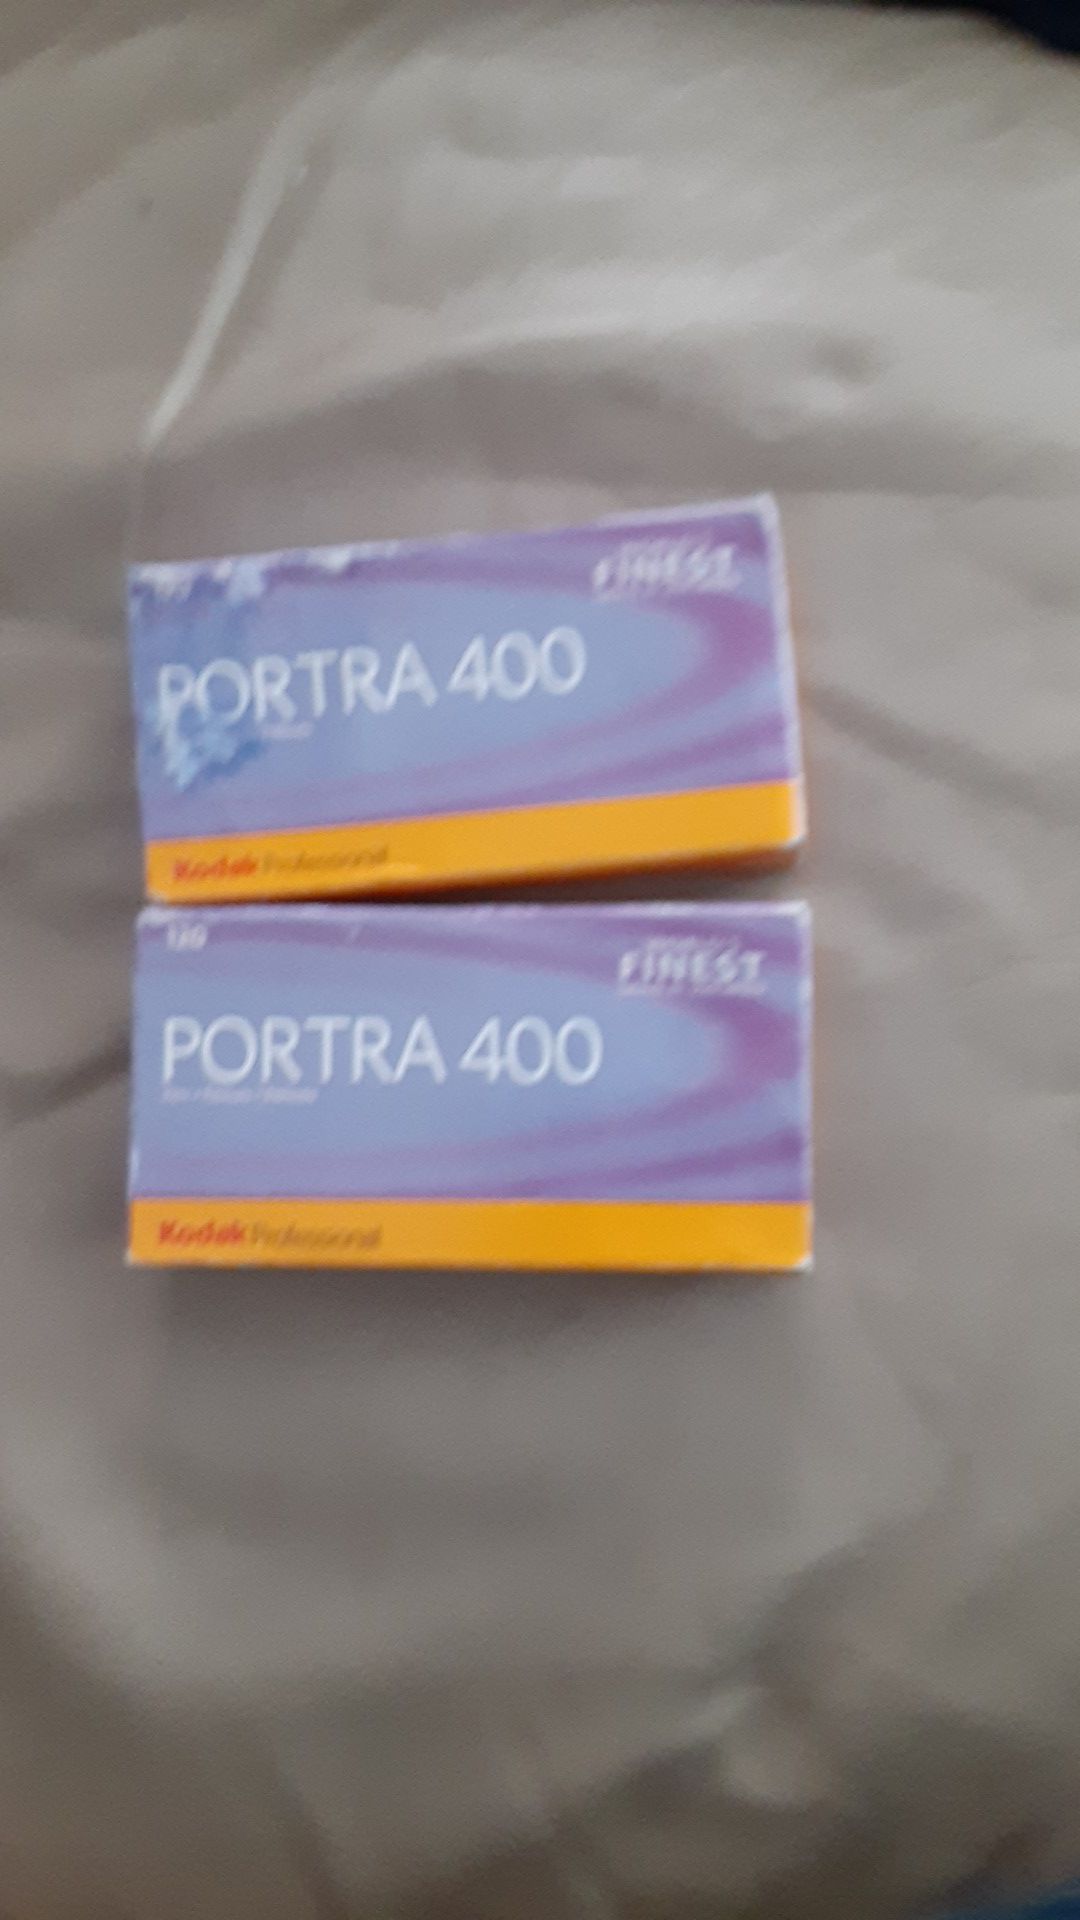 Portra 400